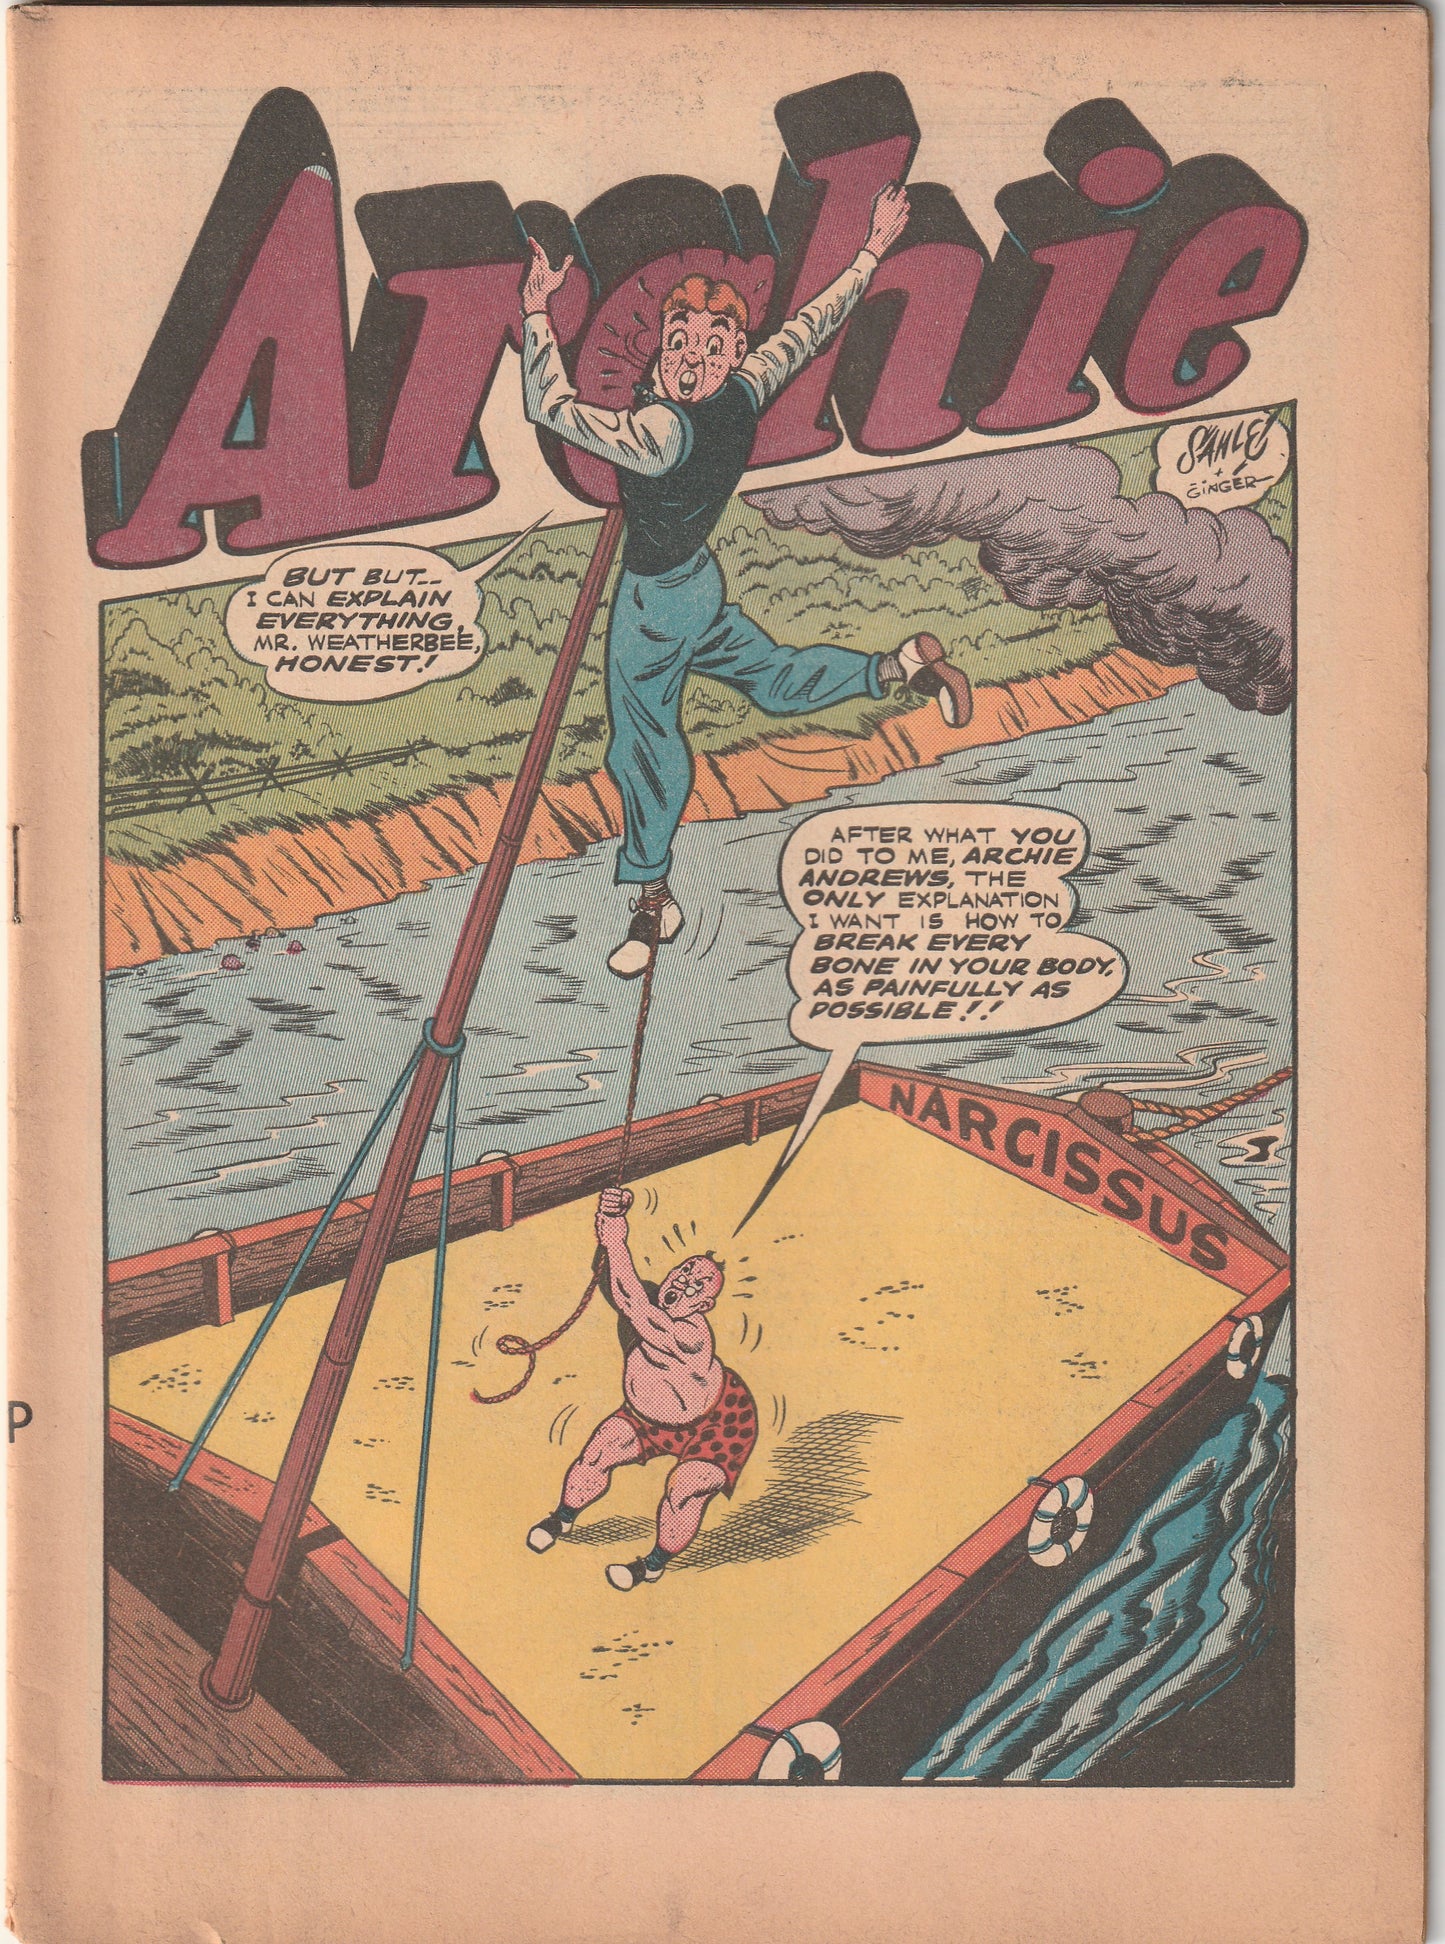 Pep Comics #49 (1944)  - Starring Archie Andrews